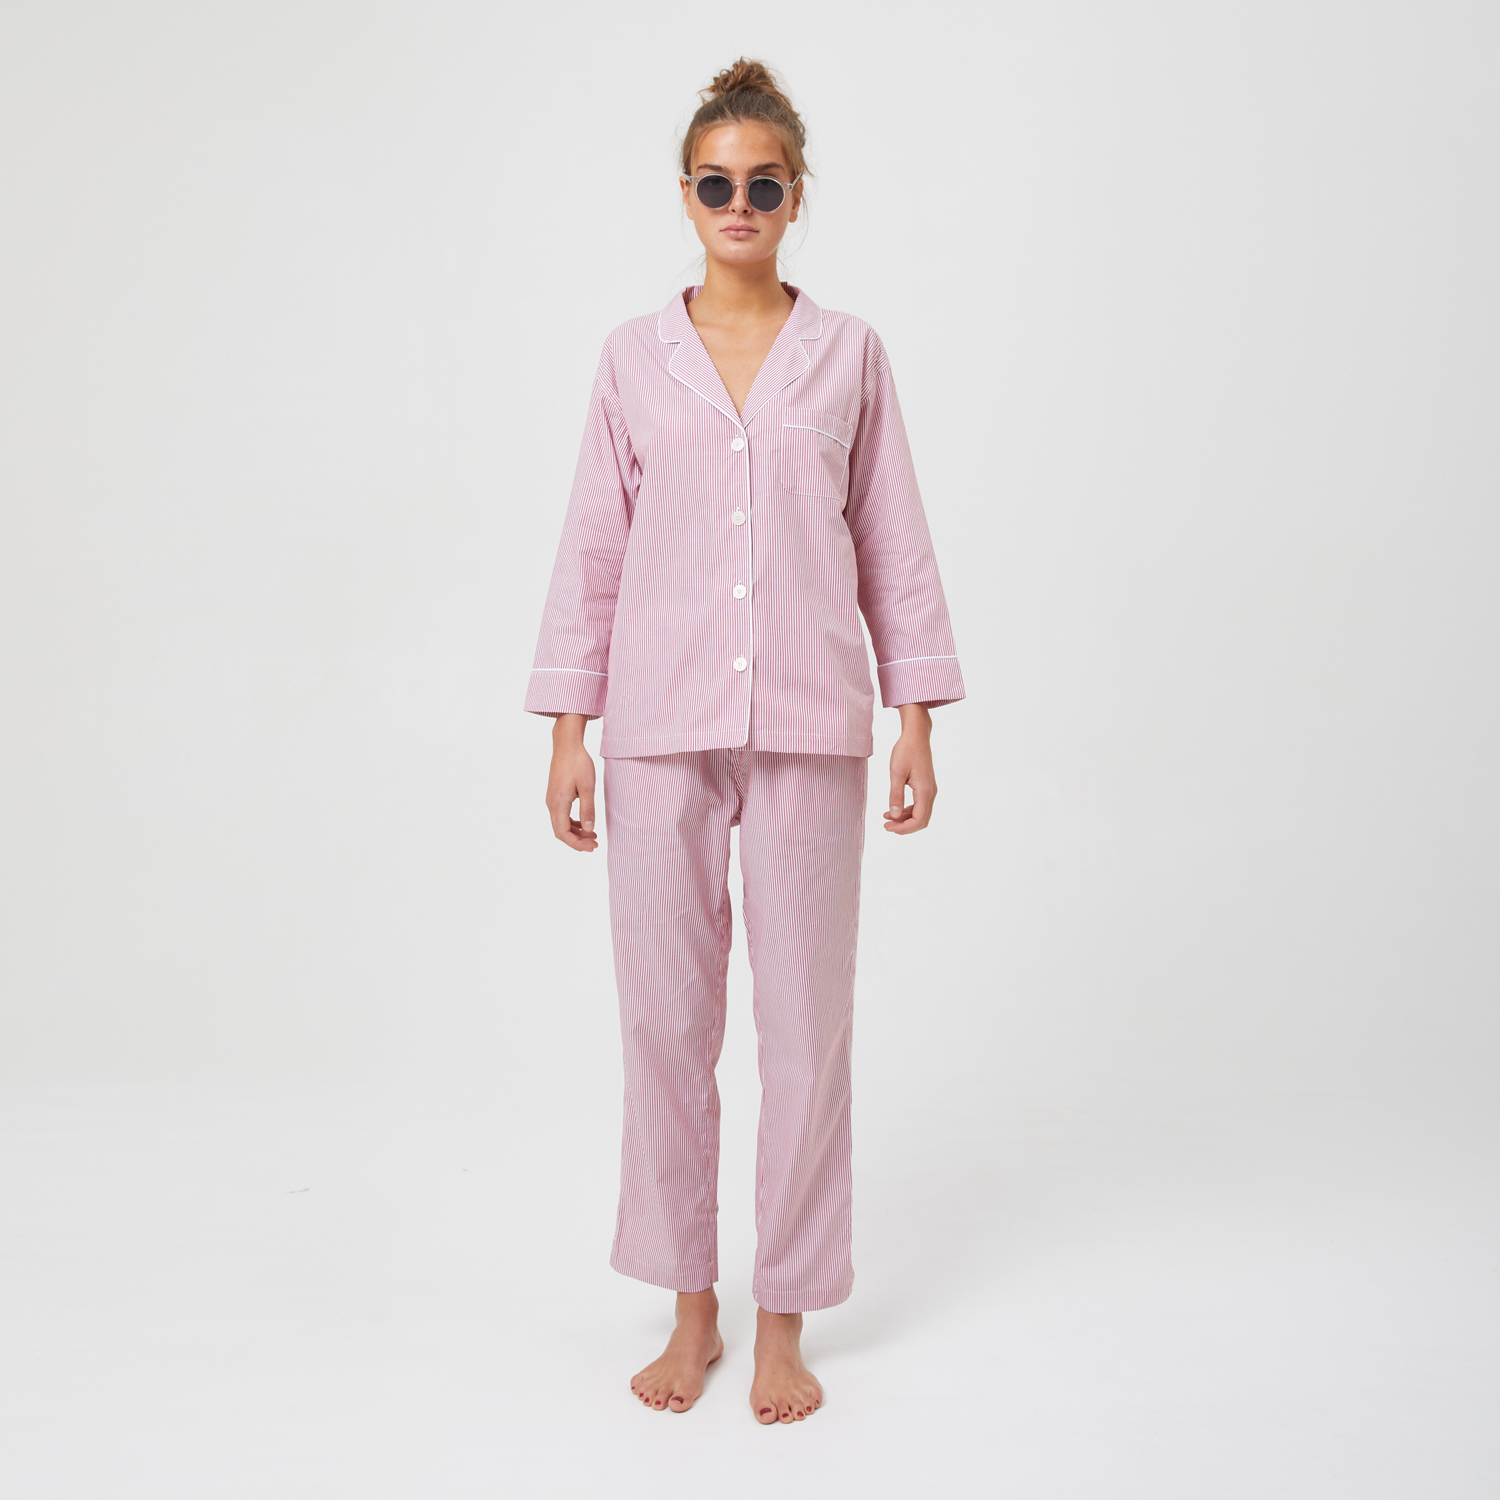 Eve Thin Stripe Red & - Loungewear Official White Womans | Unisex Pyjama - site Nufferton | – Loungewear Pyjamas Nufferton